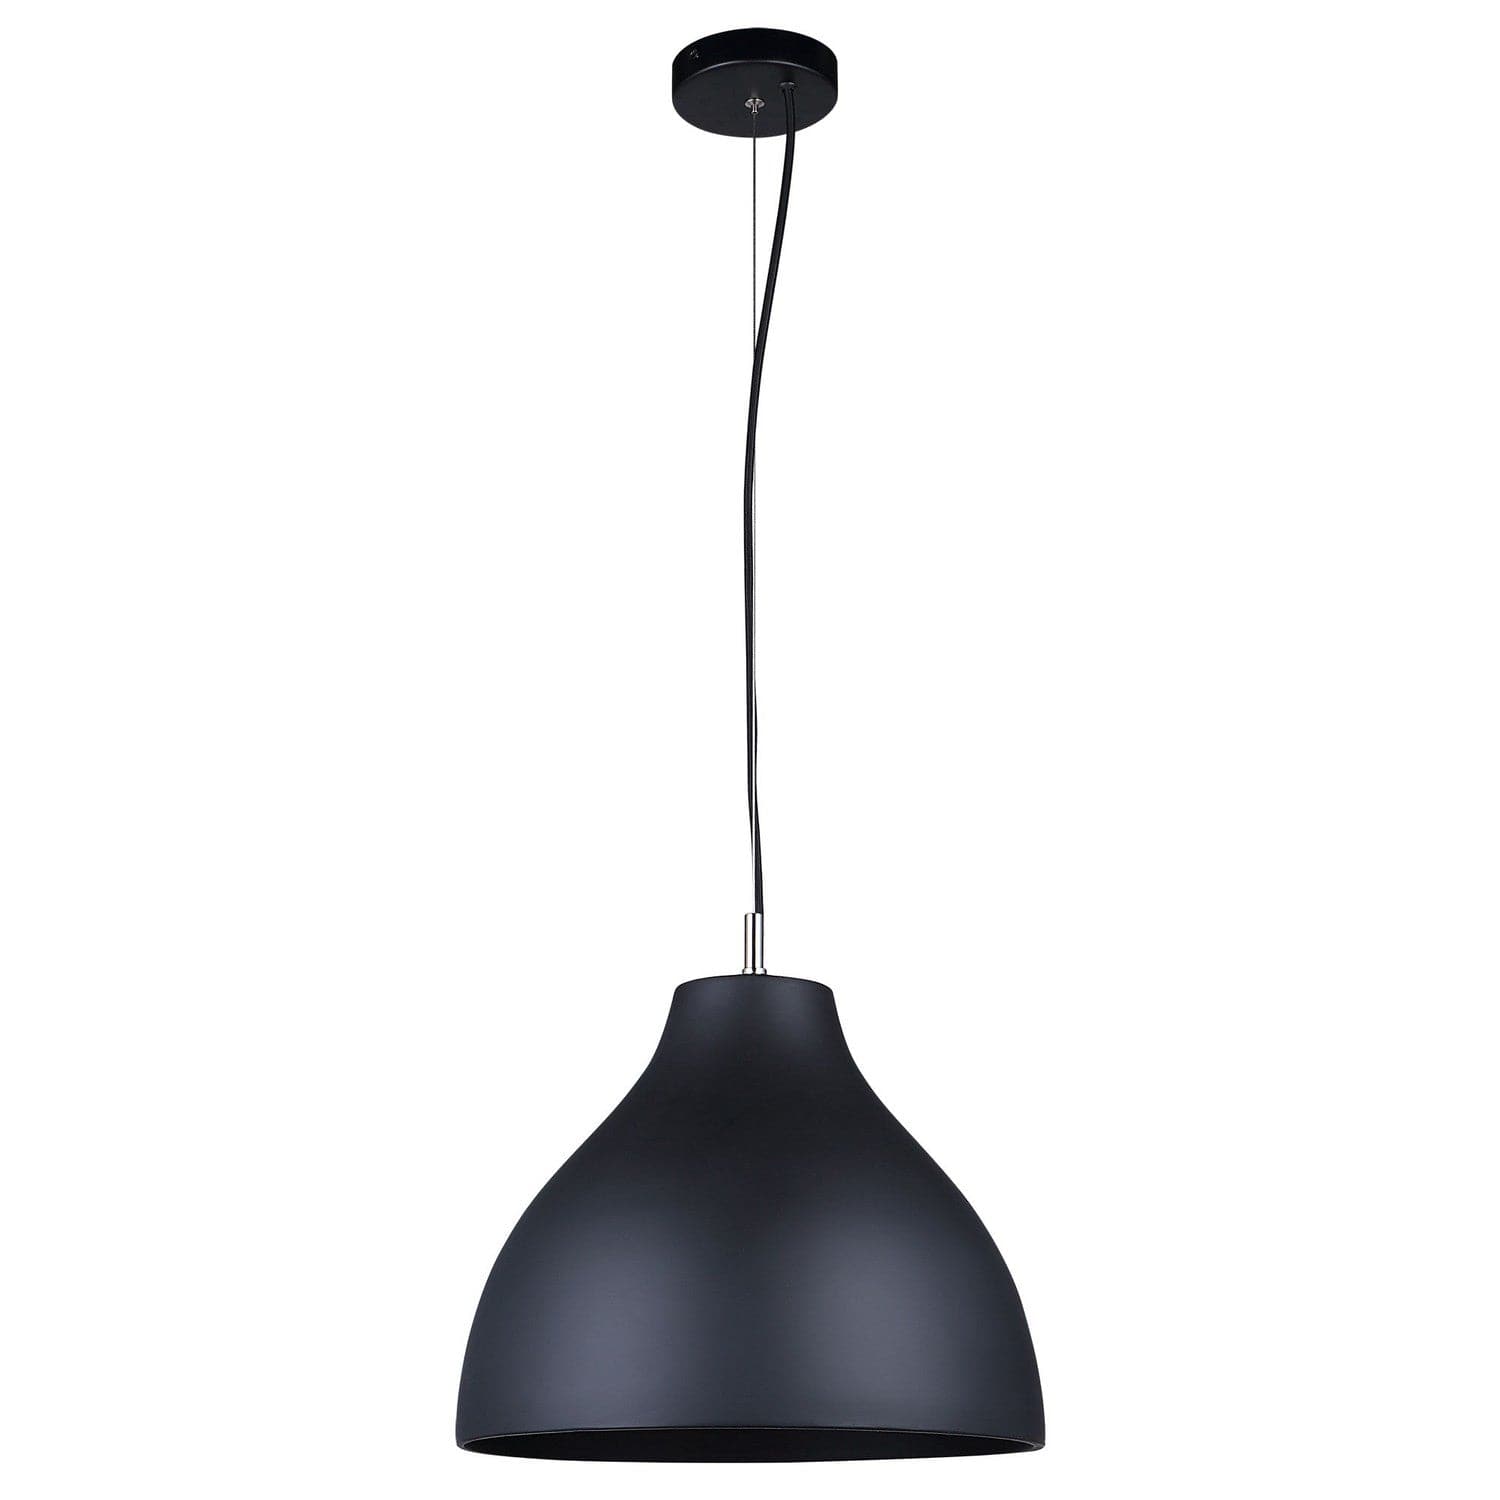 Renwil - LPC125B - One Light Ceiling Fixture - Chantal - Black